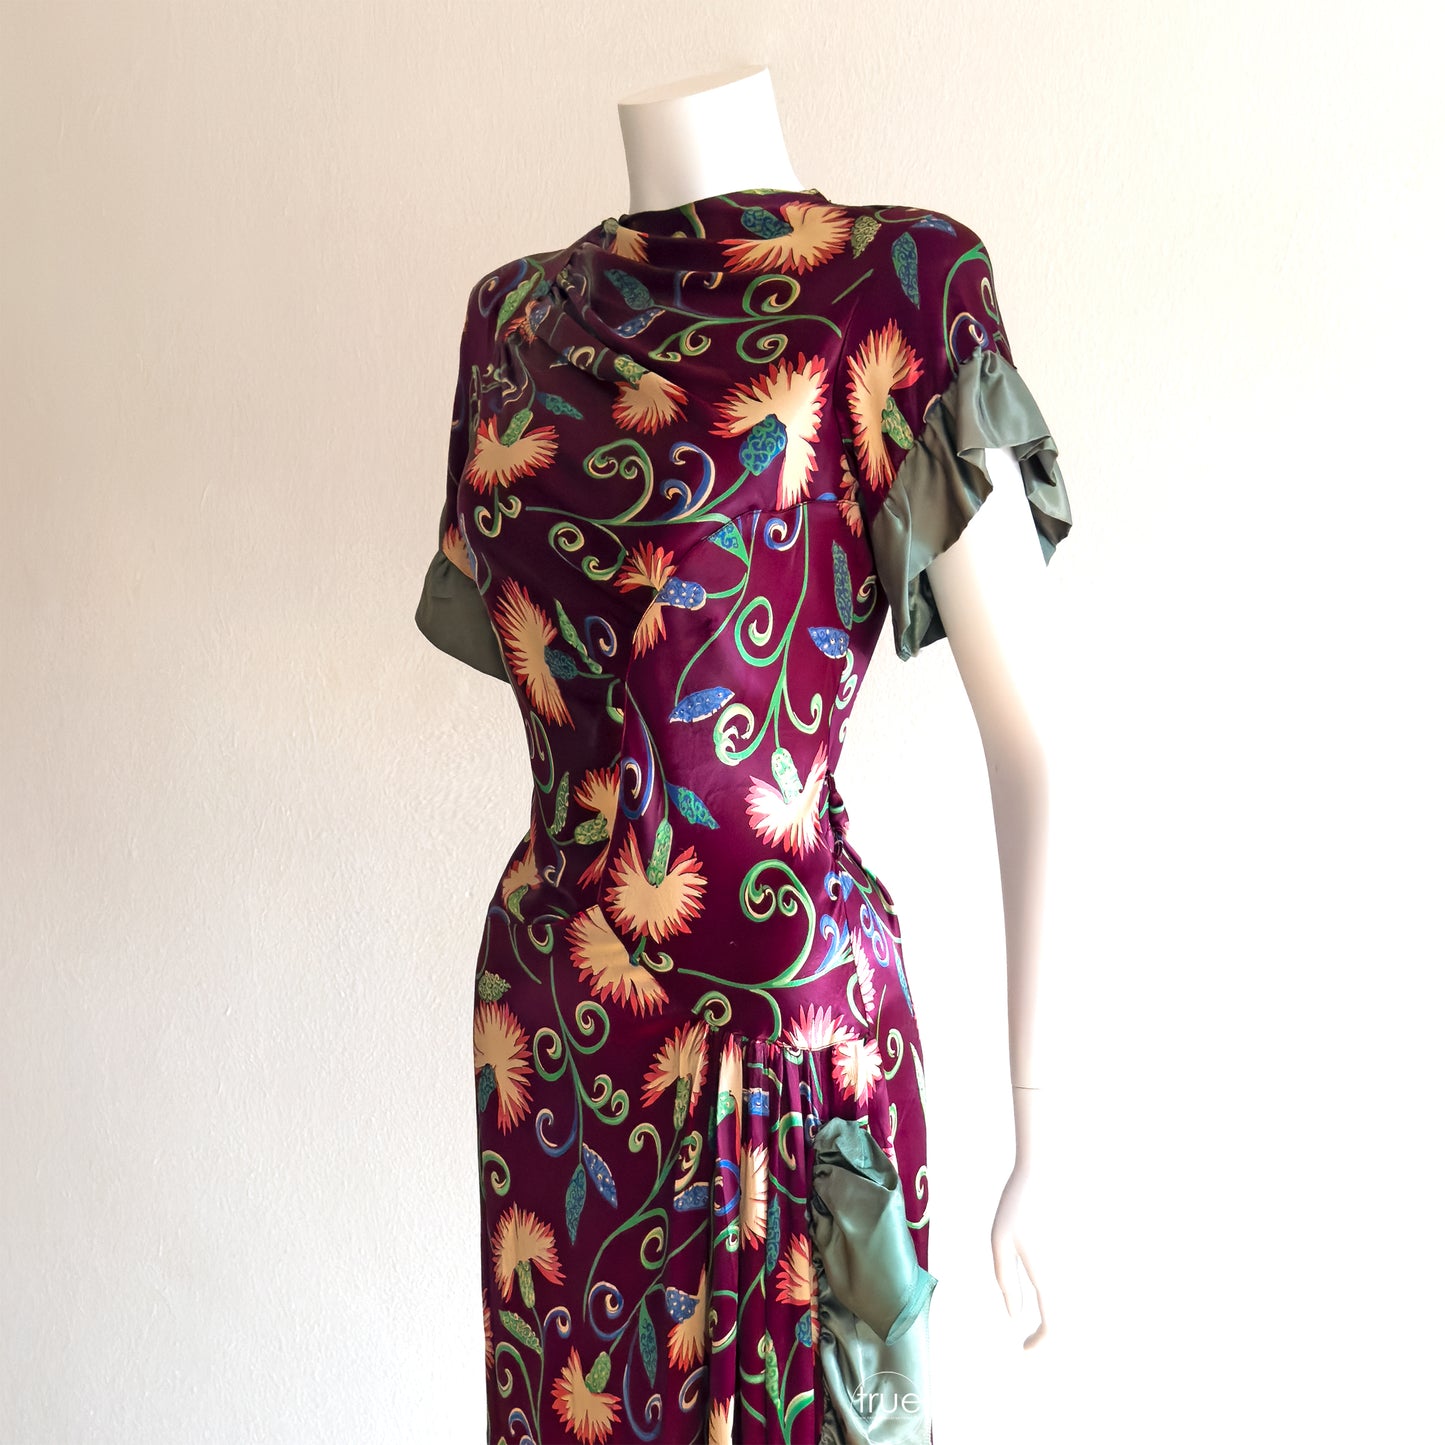 vintage 1940's dress ...gorgeous slinky plum satin floral asymmetrical dress